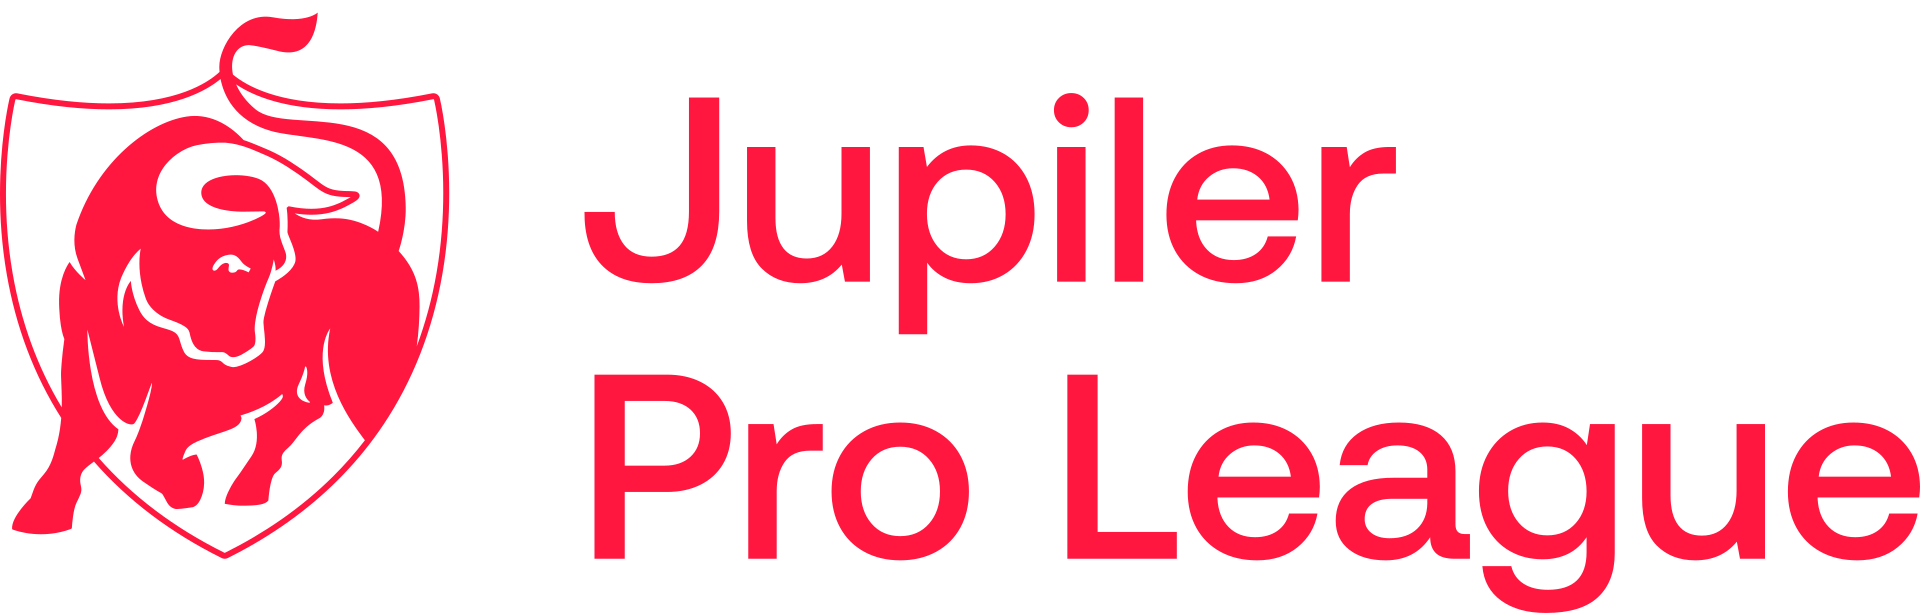 Jupiler Pro League Logo